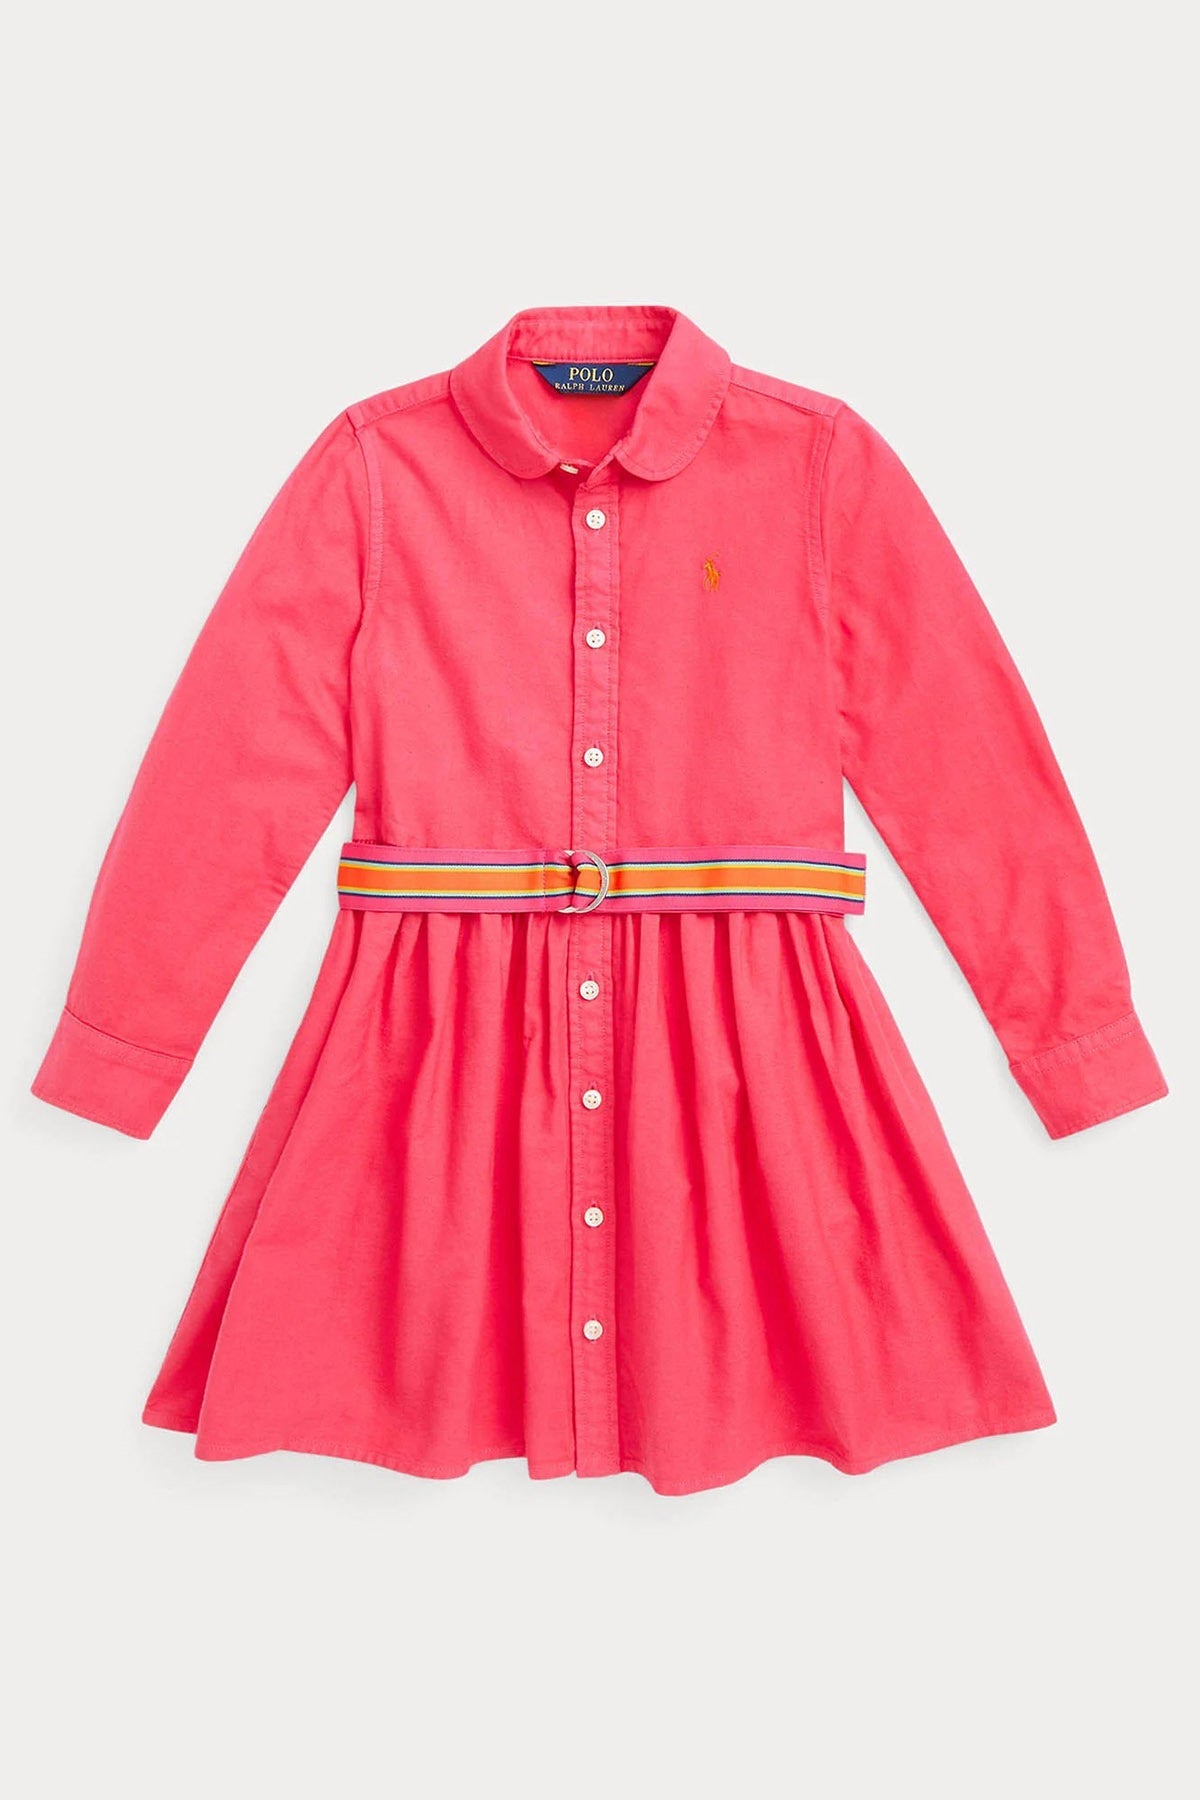 Polo Ralph Lauren Kids 5-6 Yaş Kız Çocuk Gömlek Elbise-Libas Trendy Fashion Store